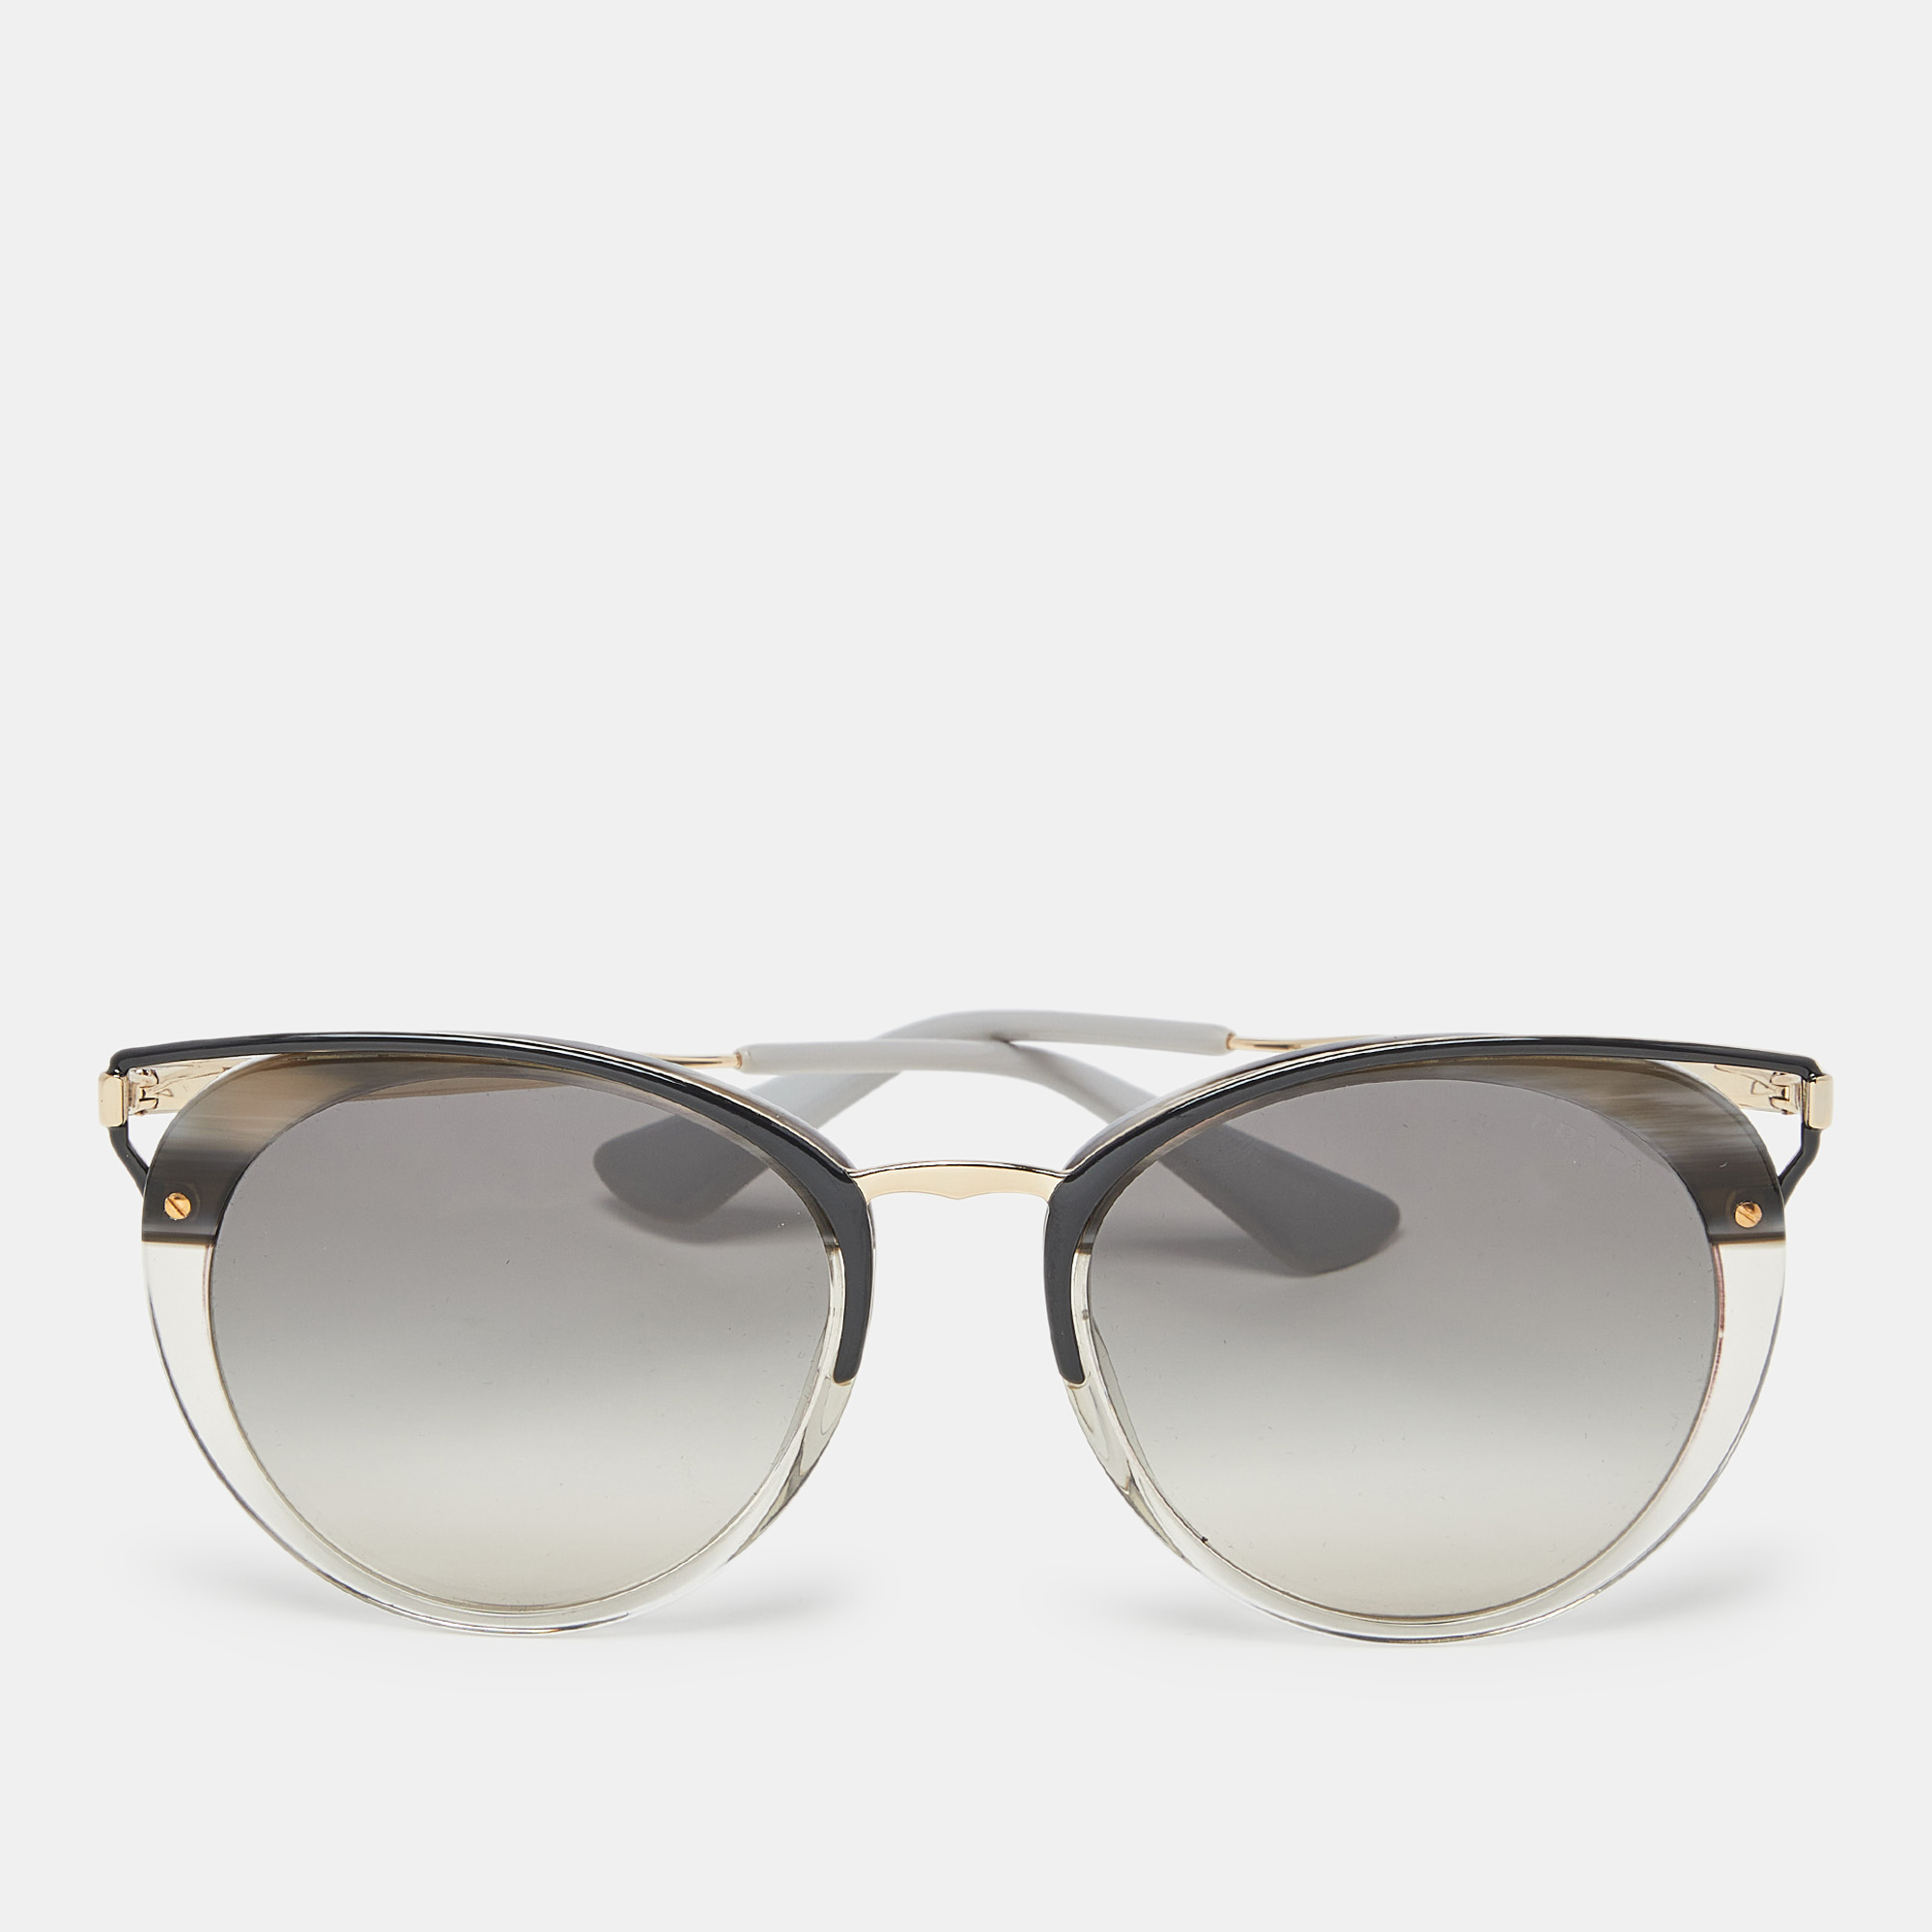 Prada grey havana/grey gradient spr66t cinema sunglasses